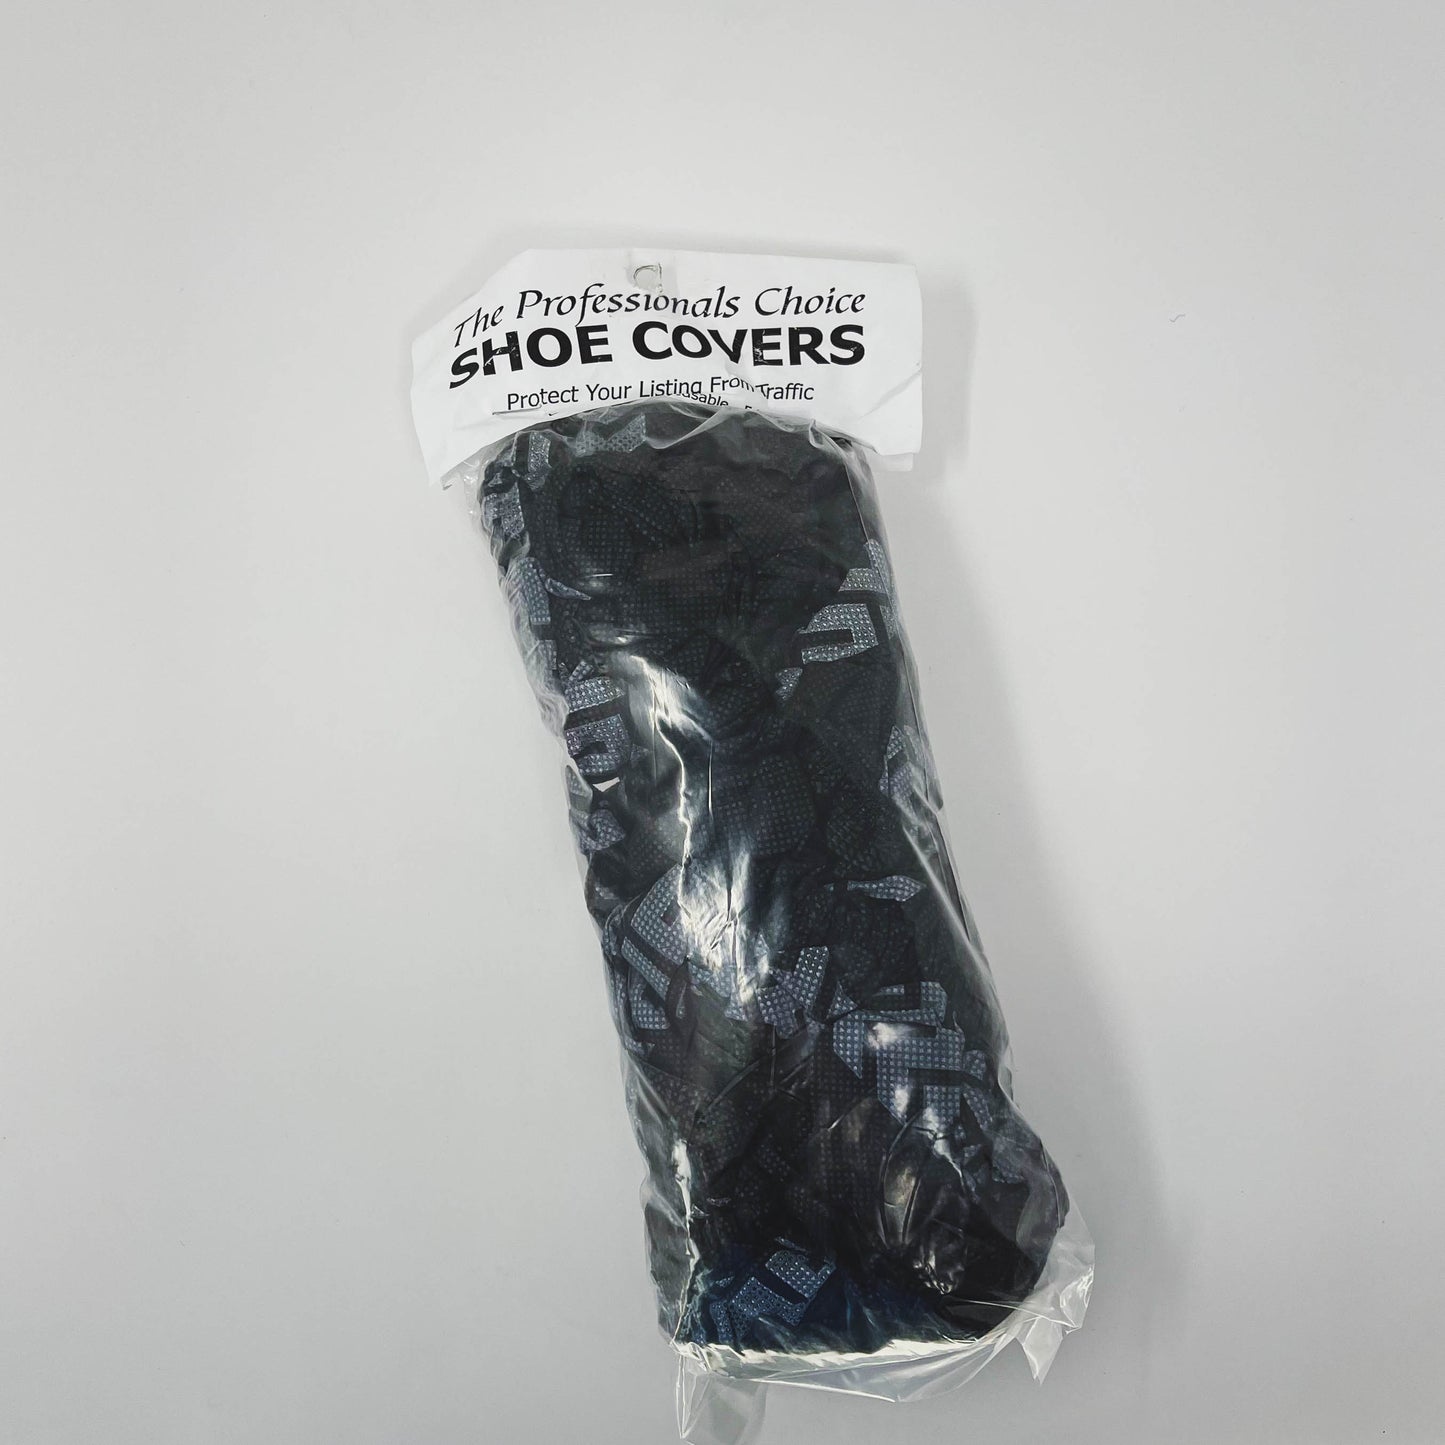 Black Non-Slip Shoe Cover 5 Pack skid resistant bottoms Protect floors Great for Open Houses (SHOEB)